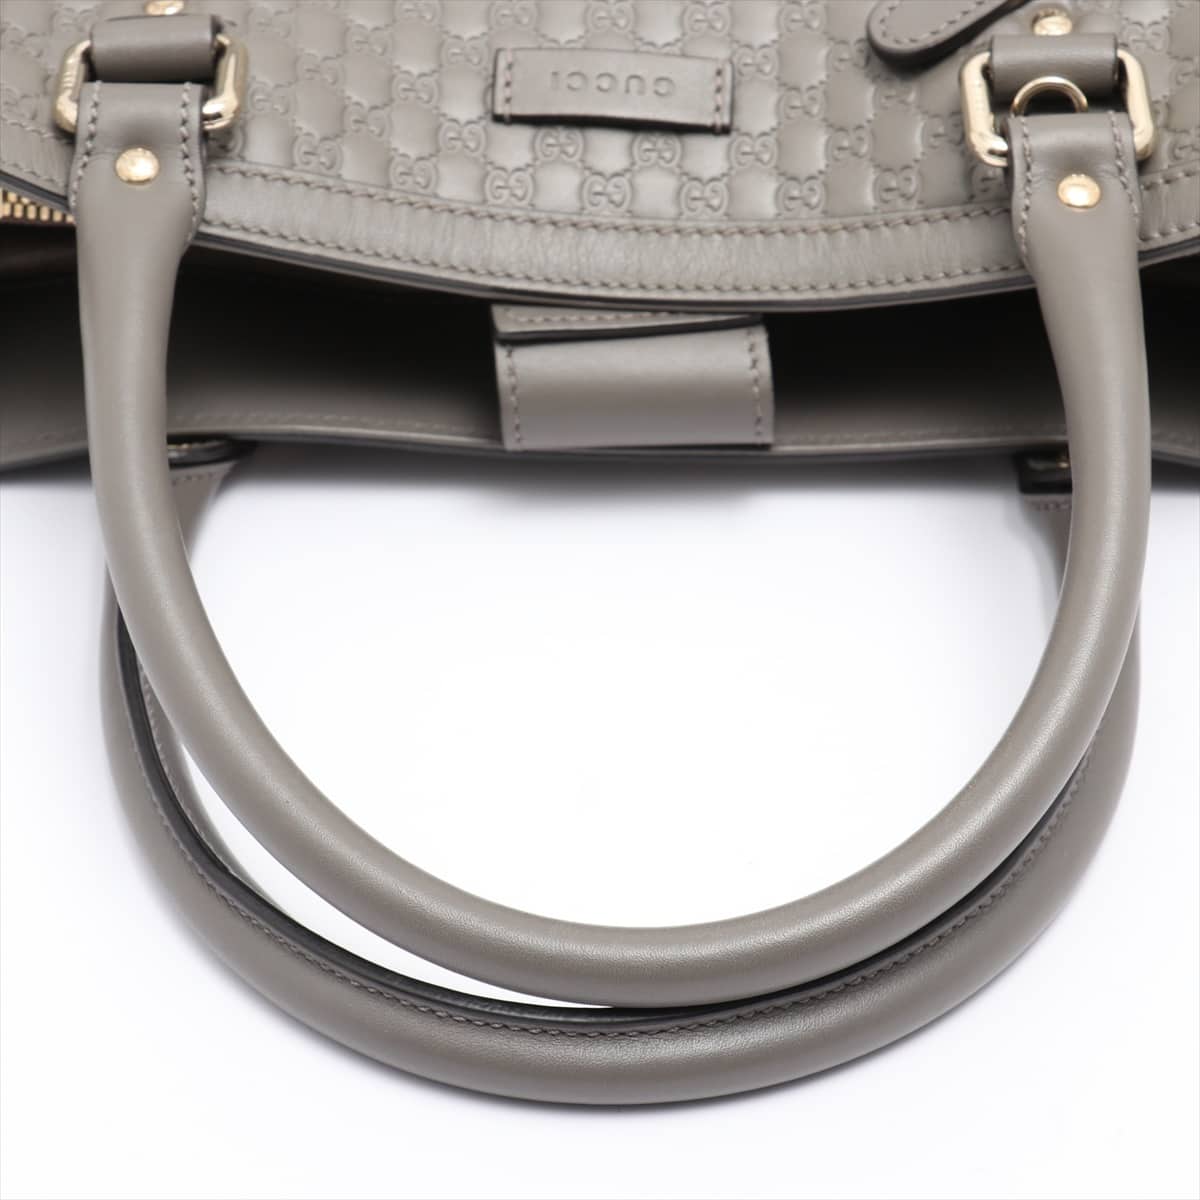 Gucci Micro Guccissima Leather 2way handbag Grey 510291